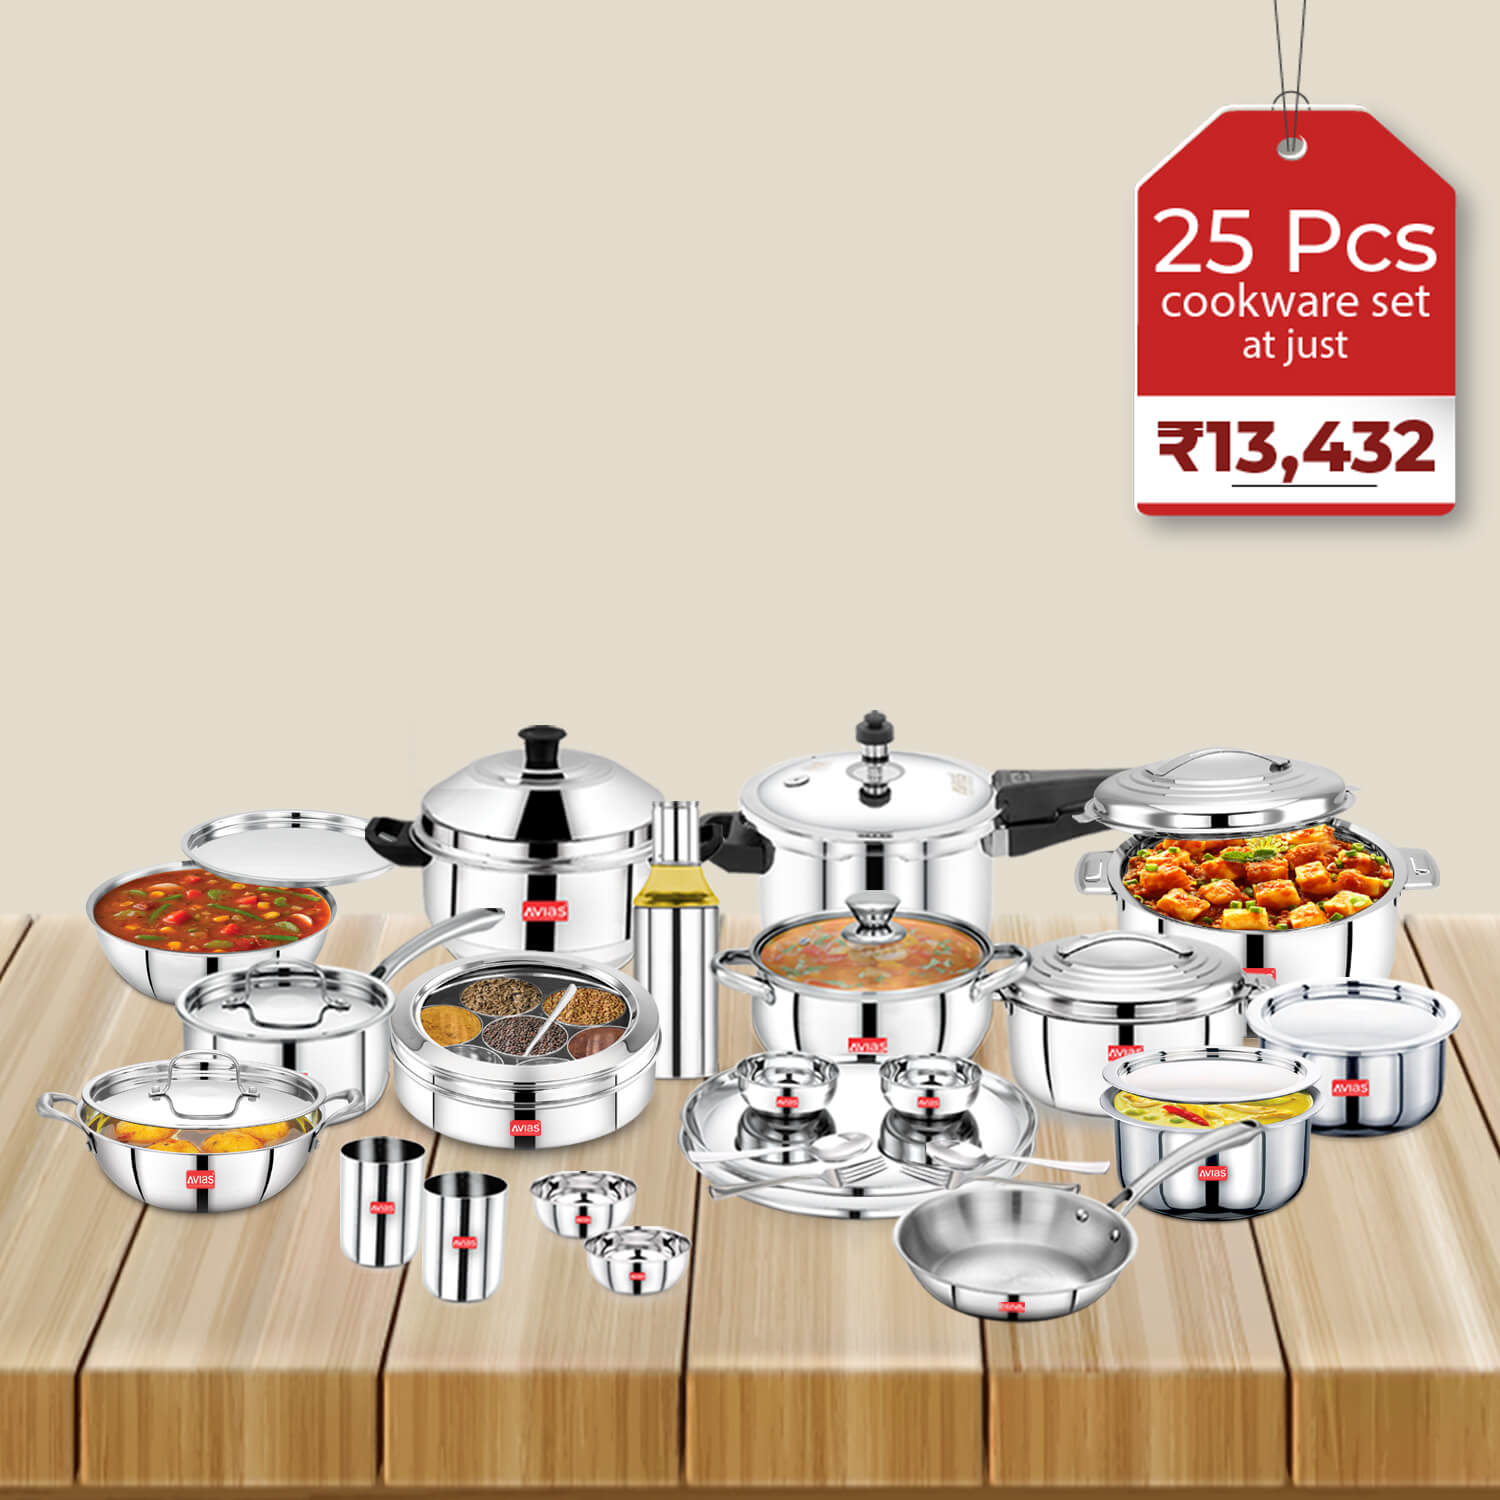 Stainless Steel 25 PCS Kitchen set | Premium | High grade and Premium quality